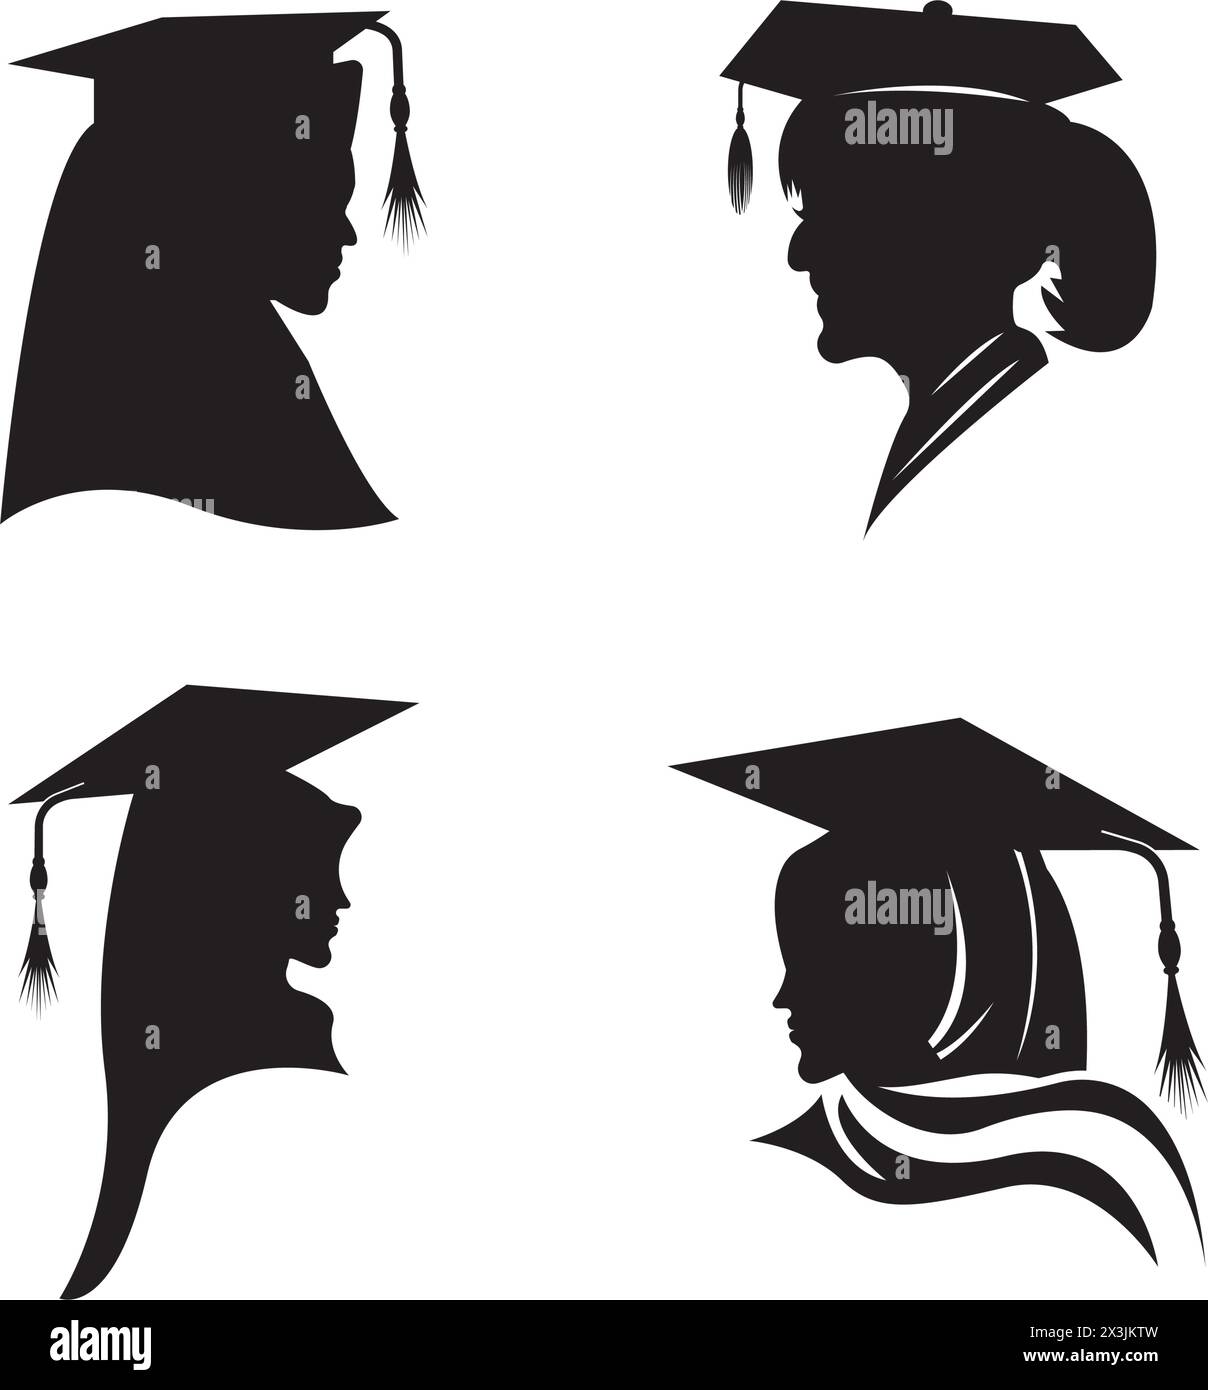 School graduation logo template design Stock Vector